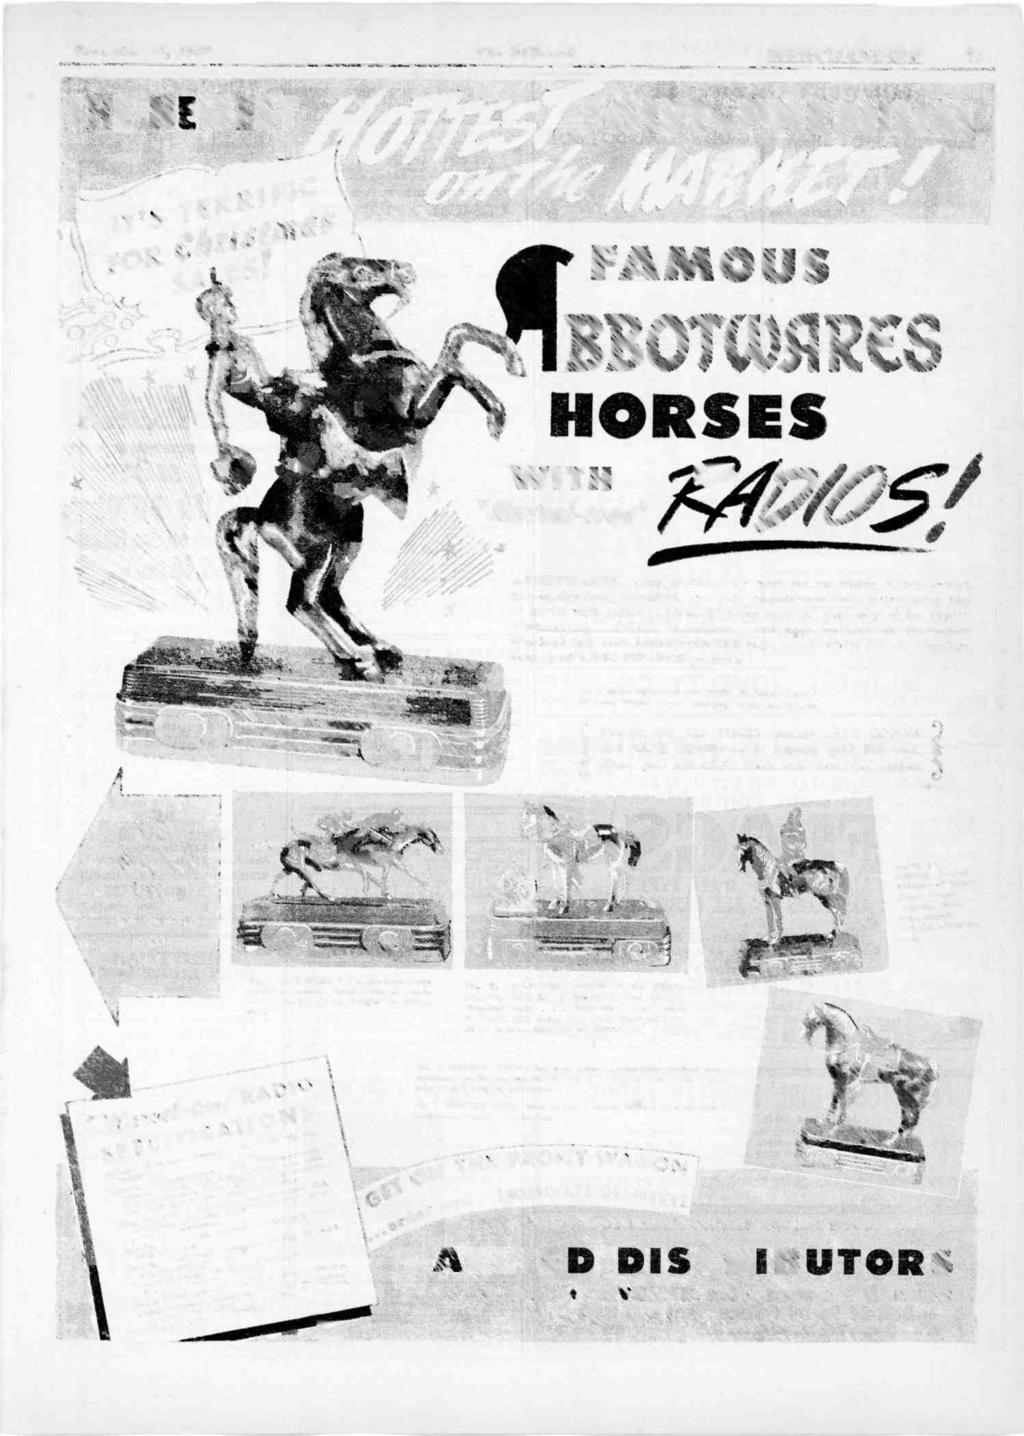 November 15, 1947 The Billboard 1rIERCHANDISE i7 FAMOUS PREMIUM 7 BBOTWARES HORSES WITH "Alarveintane" Pe25/ ABBOTWARES.